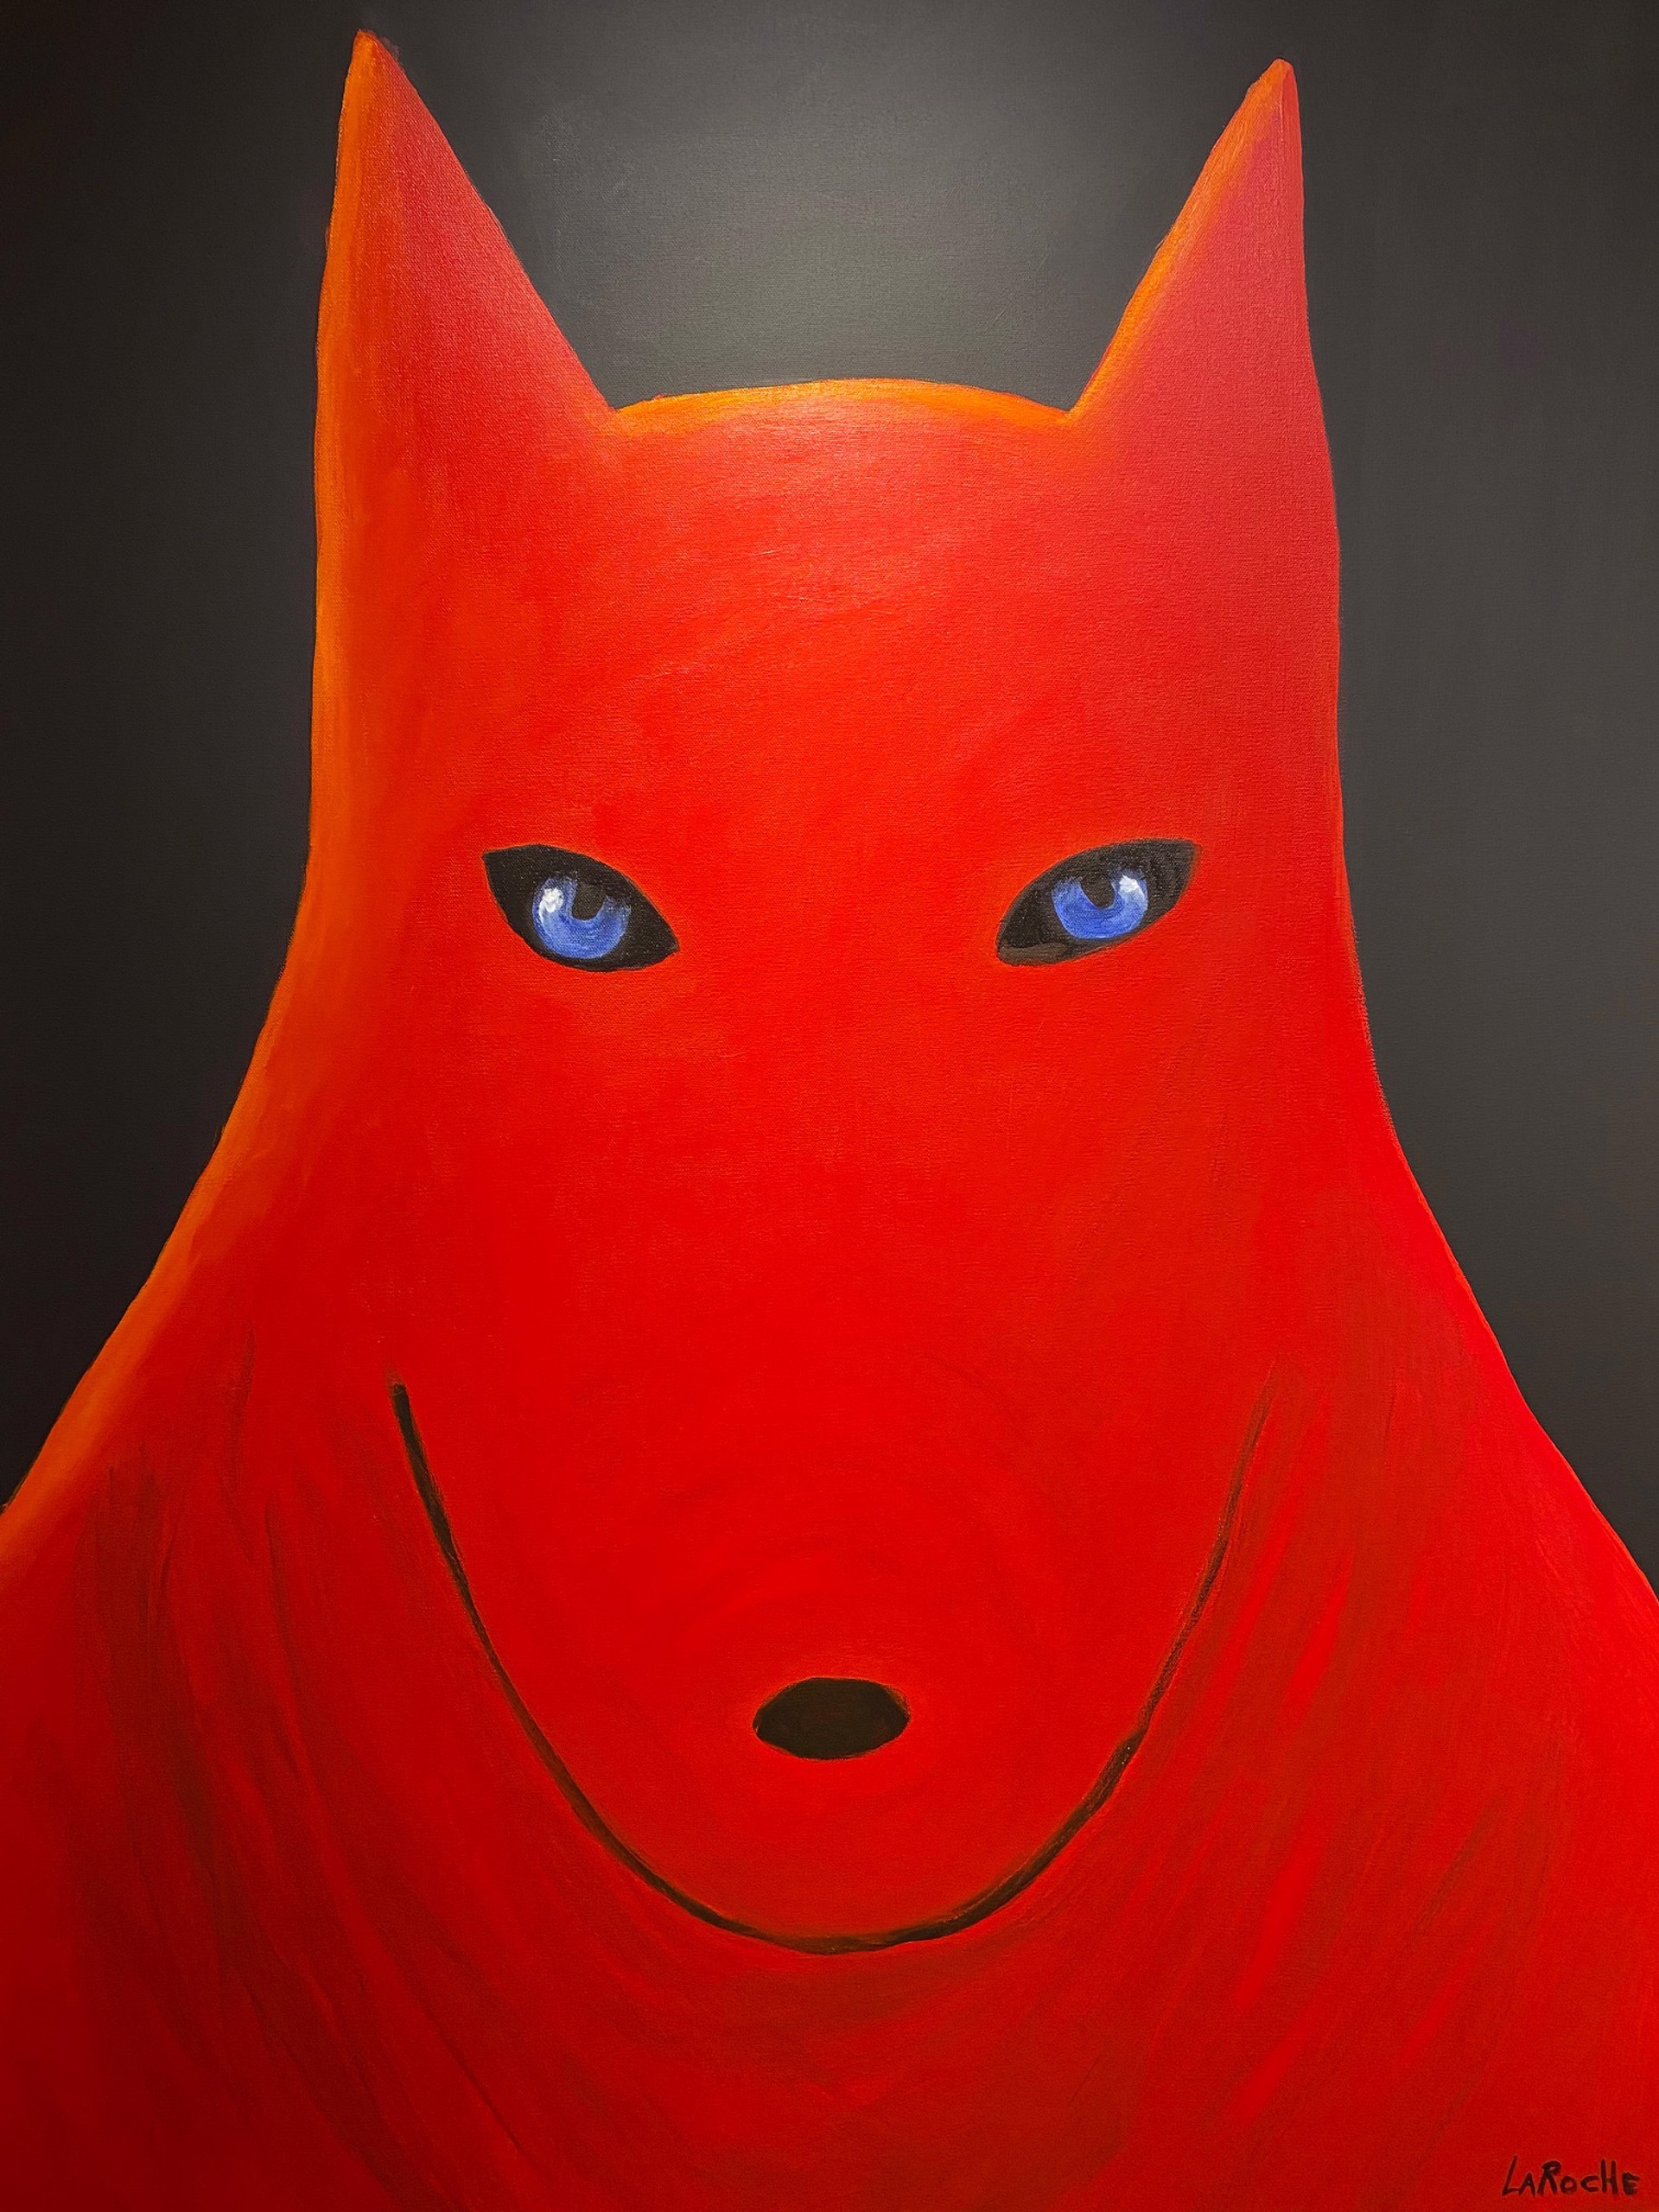 Big Red by Carole LaRoche